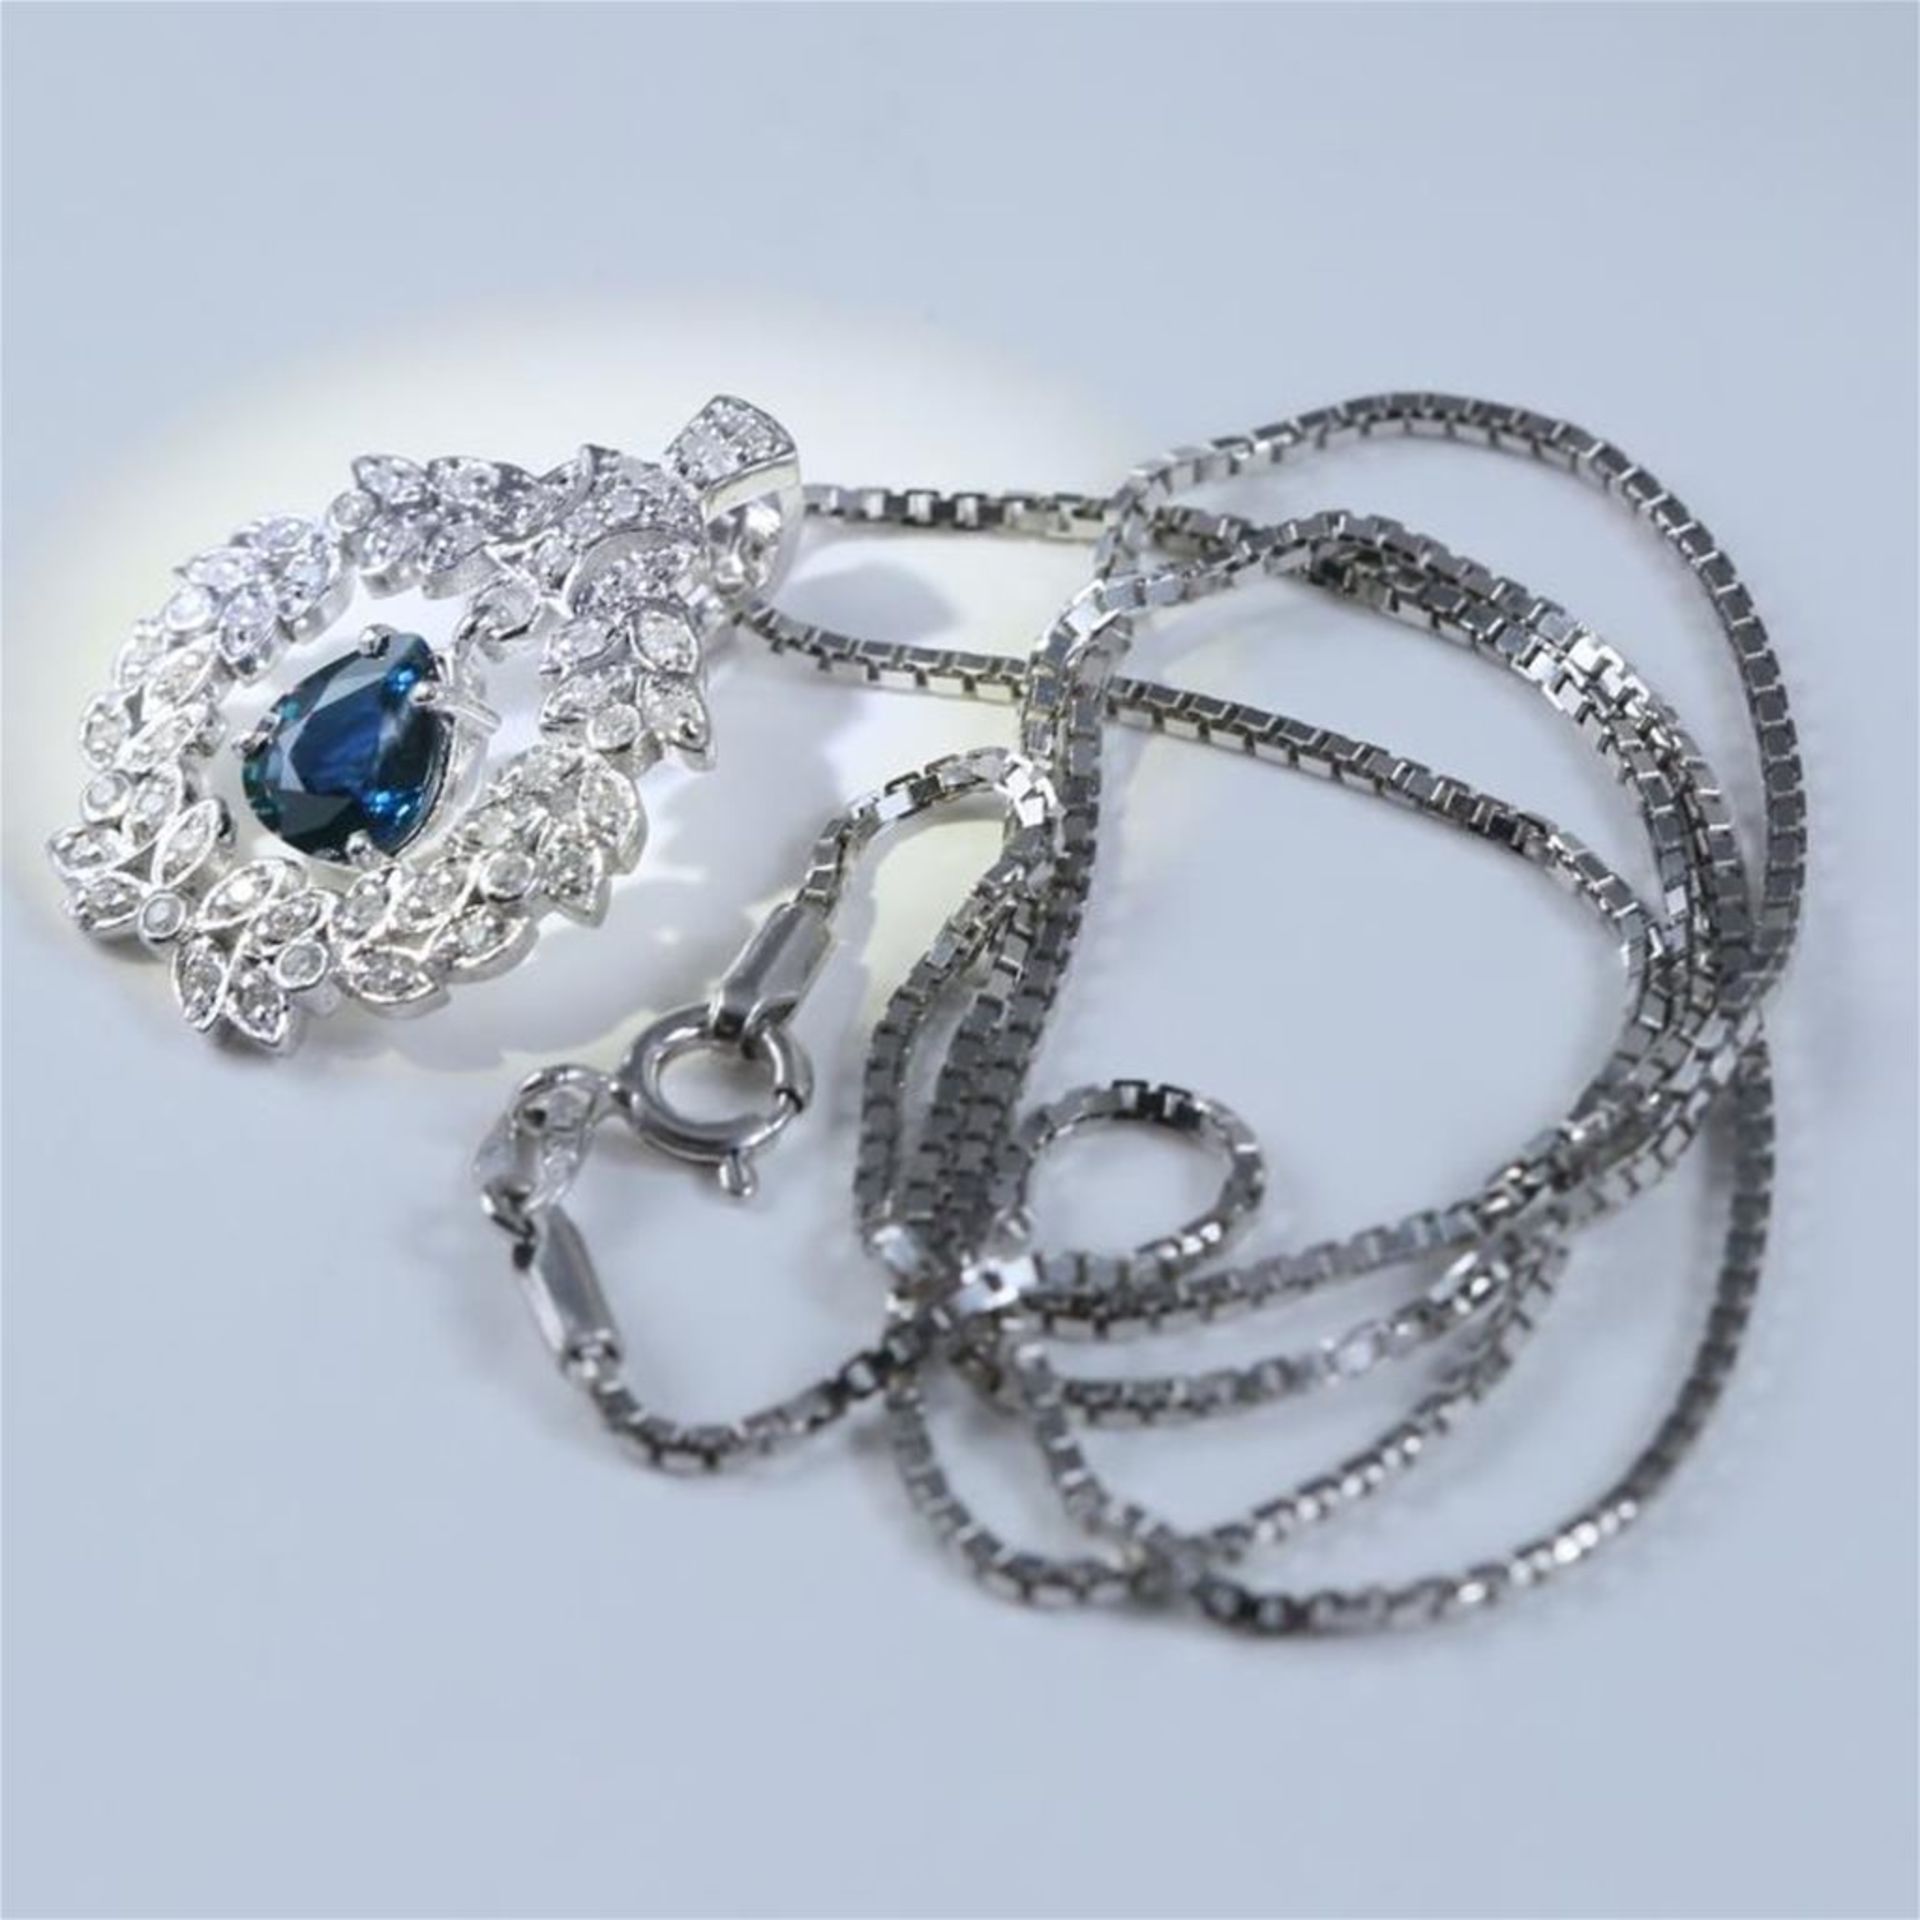 14 K / 585 White Gold Designer Sapphire (GIA Certified) and Diamond Pendant - Image 4 of 4